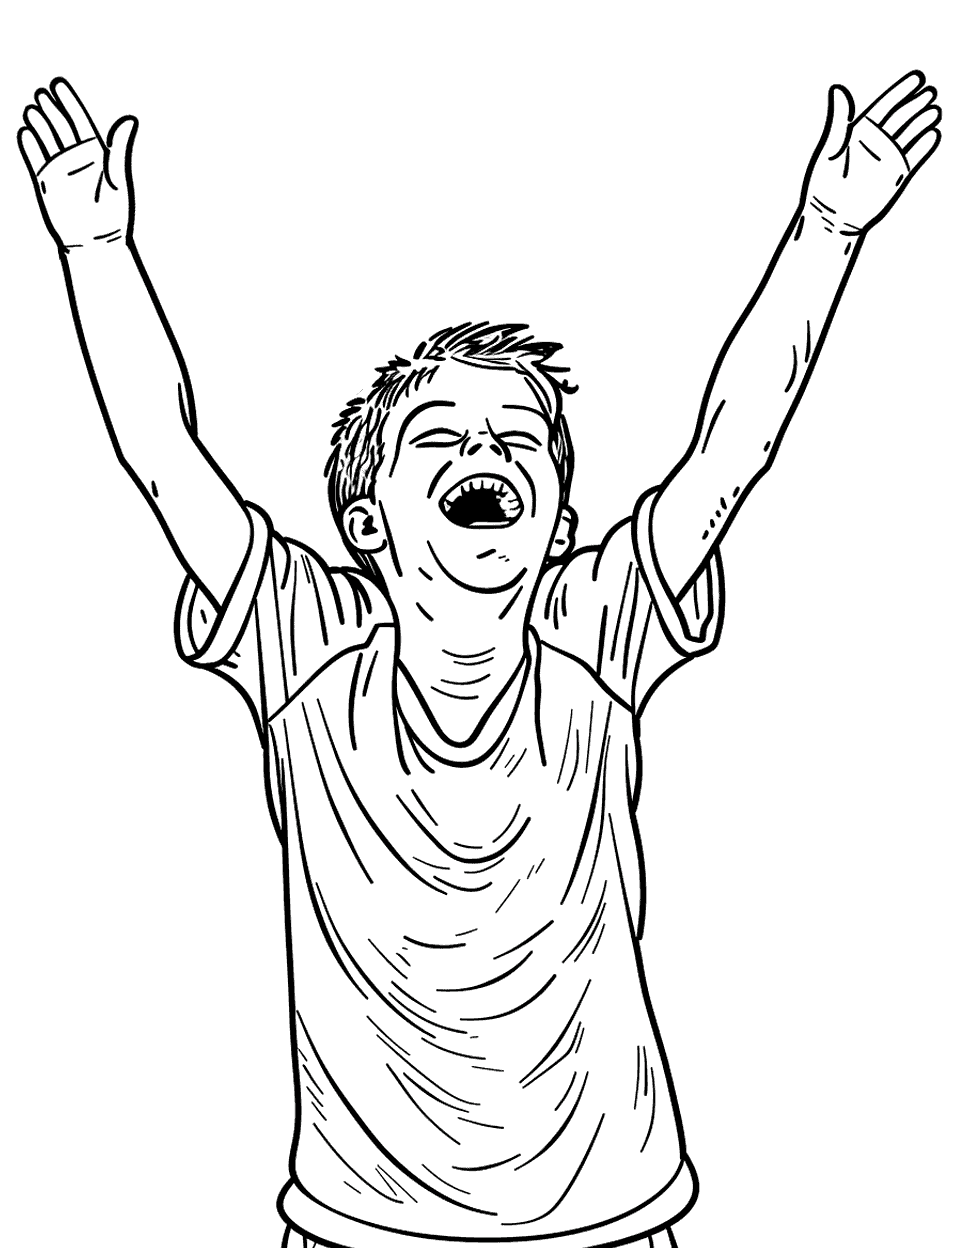 Goal Scorer's Joy Soccer Coloring Page - A player’s joyful expression after scoring a goal.